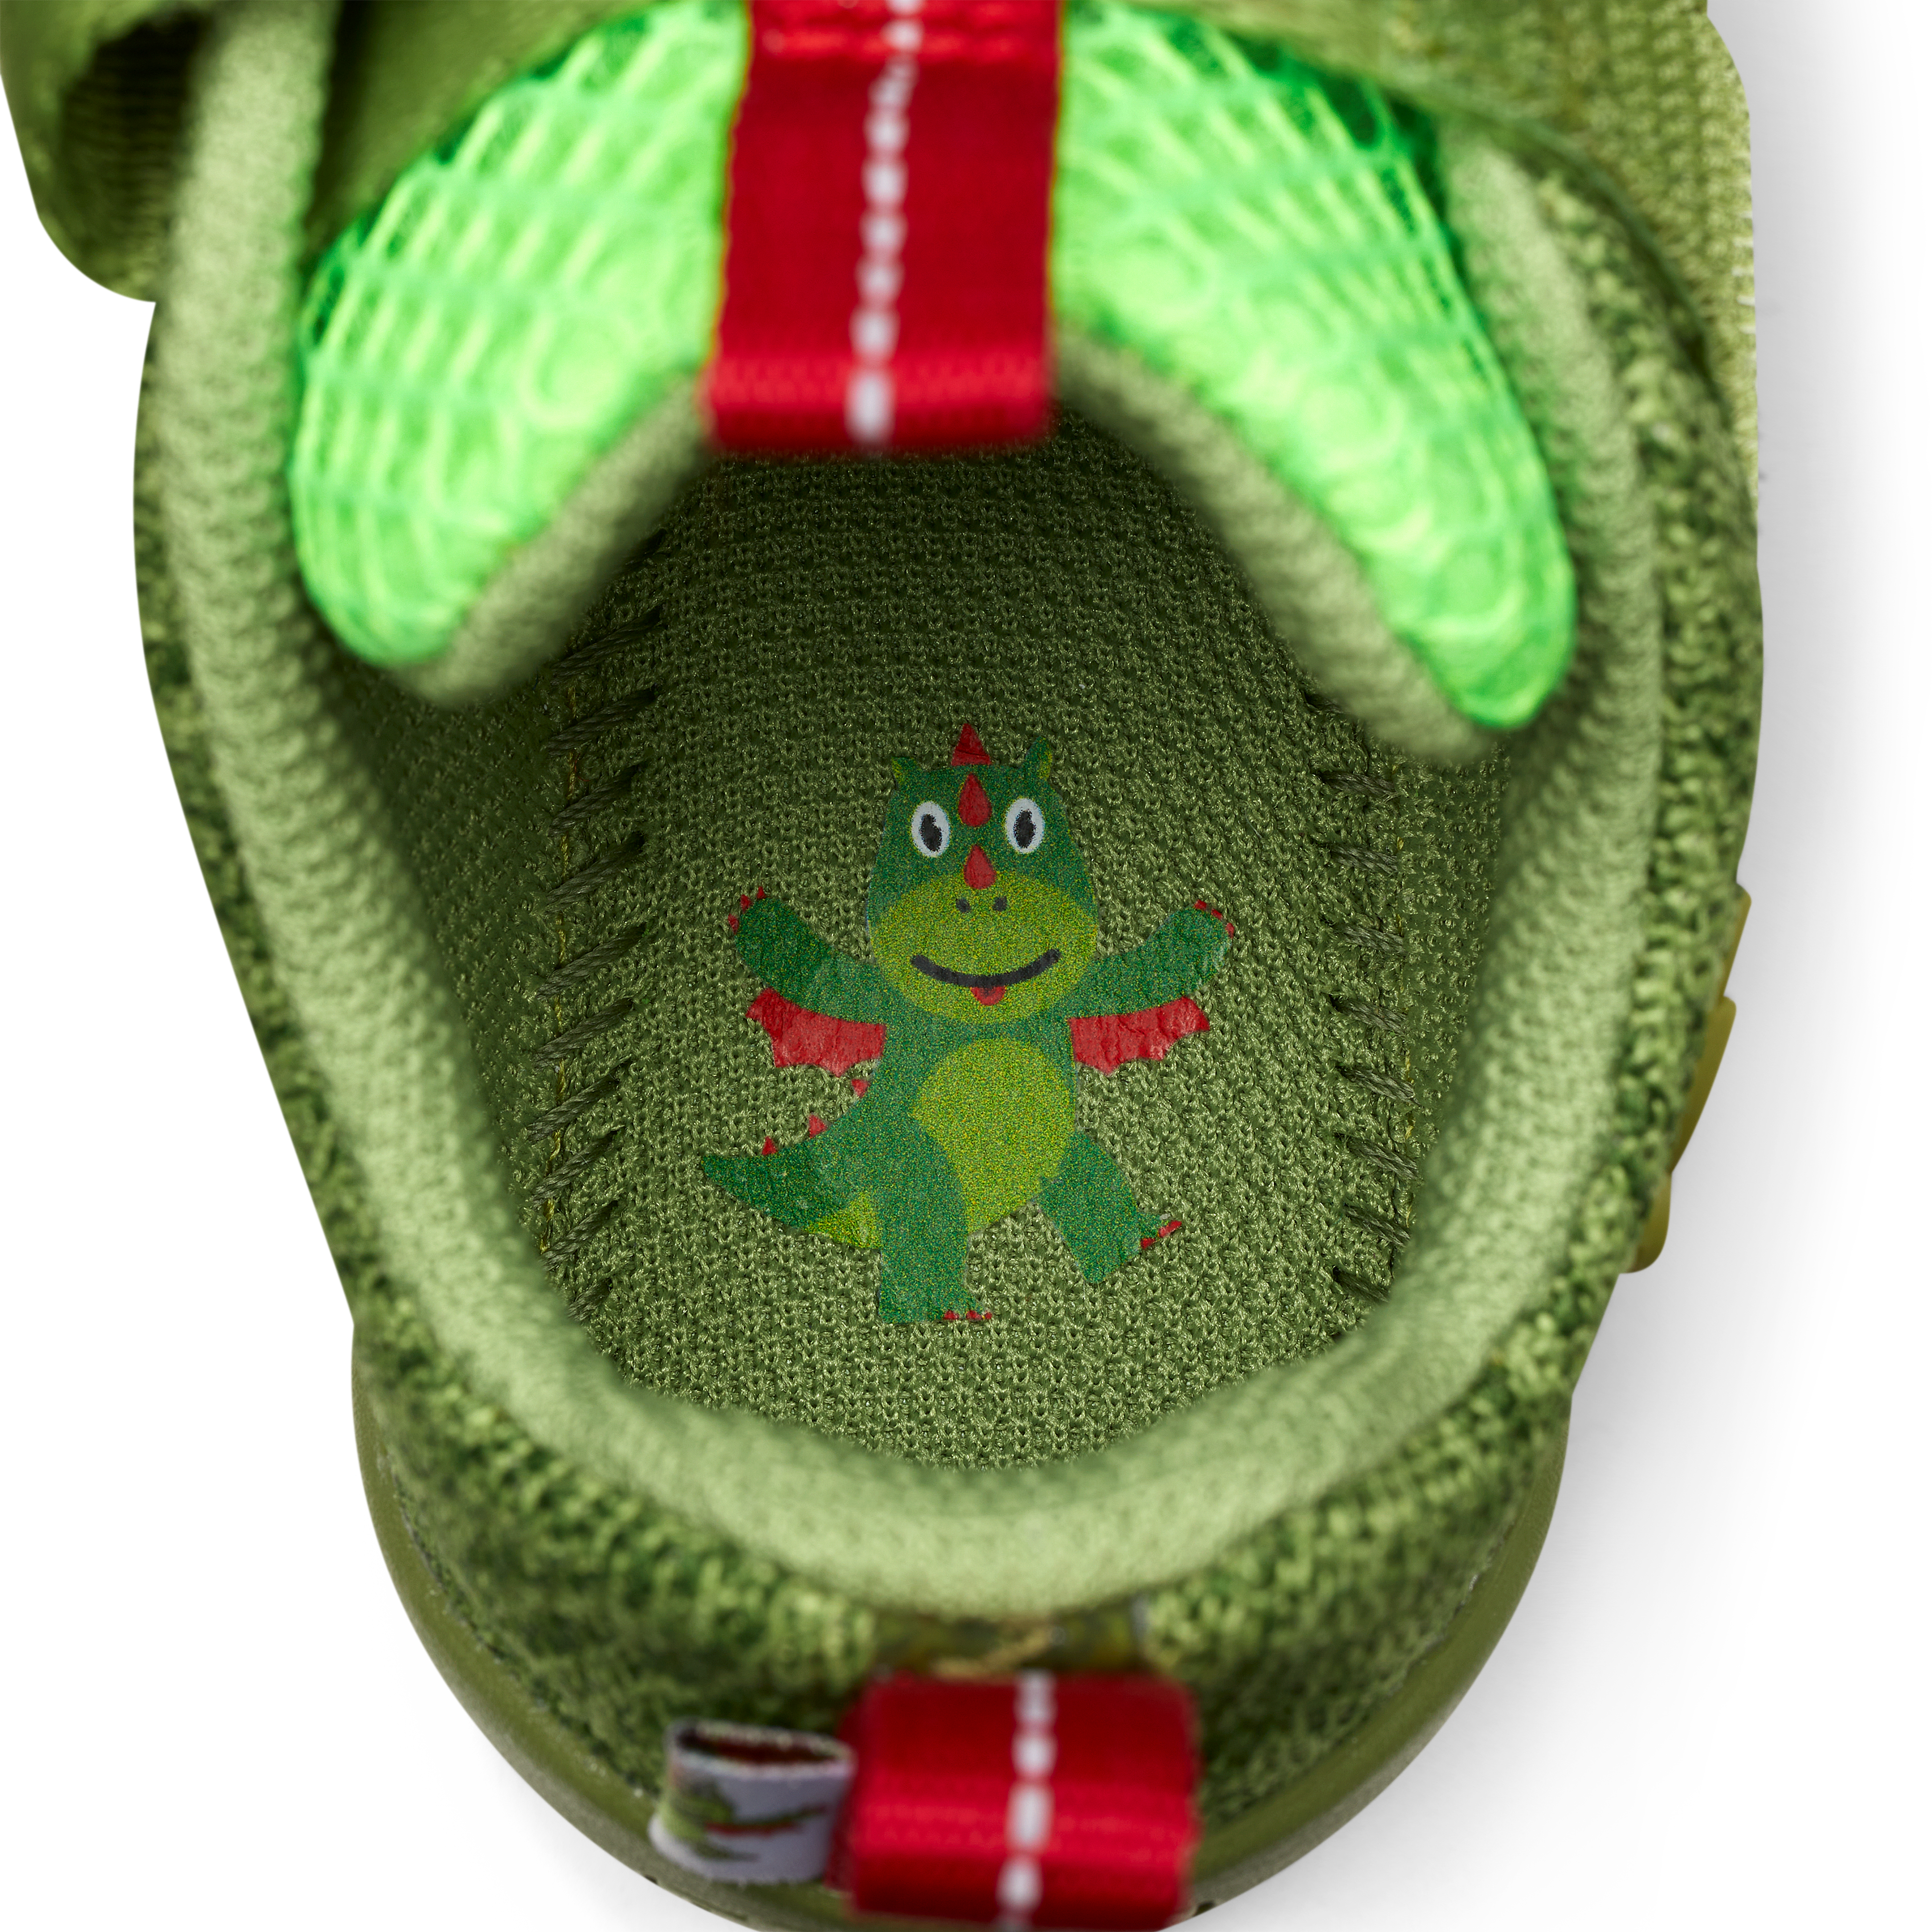 Affenzahn Knit Happy barfods sneakers til børn i farven dragon, detalje